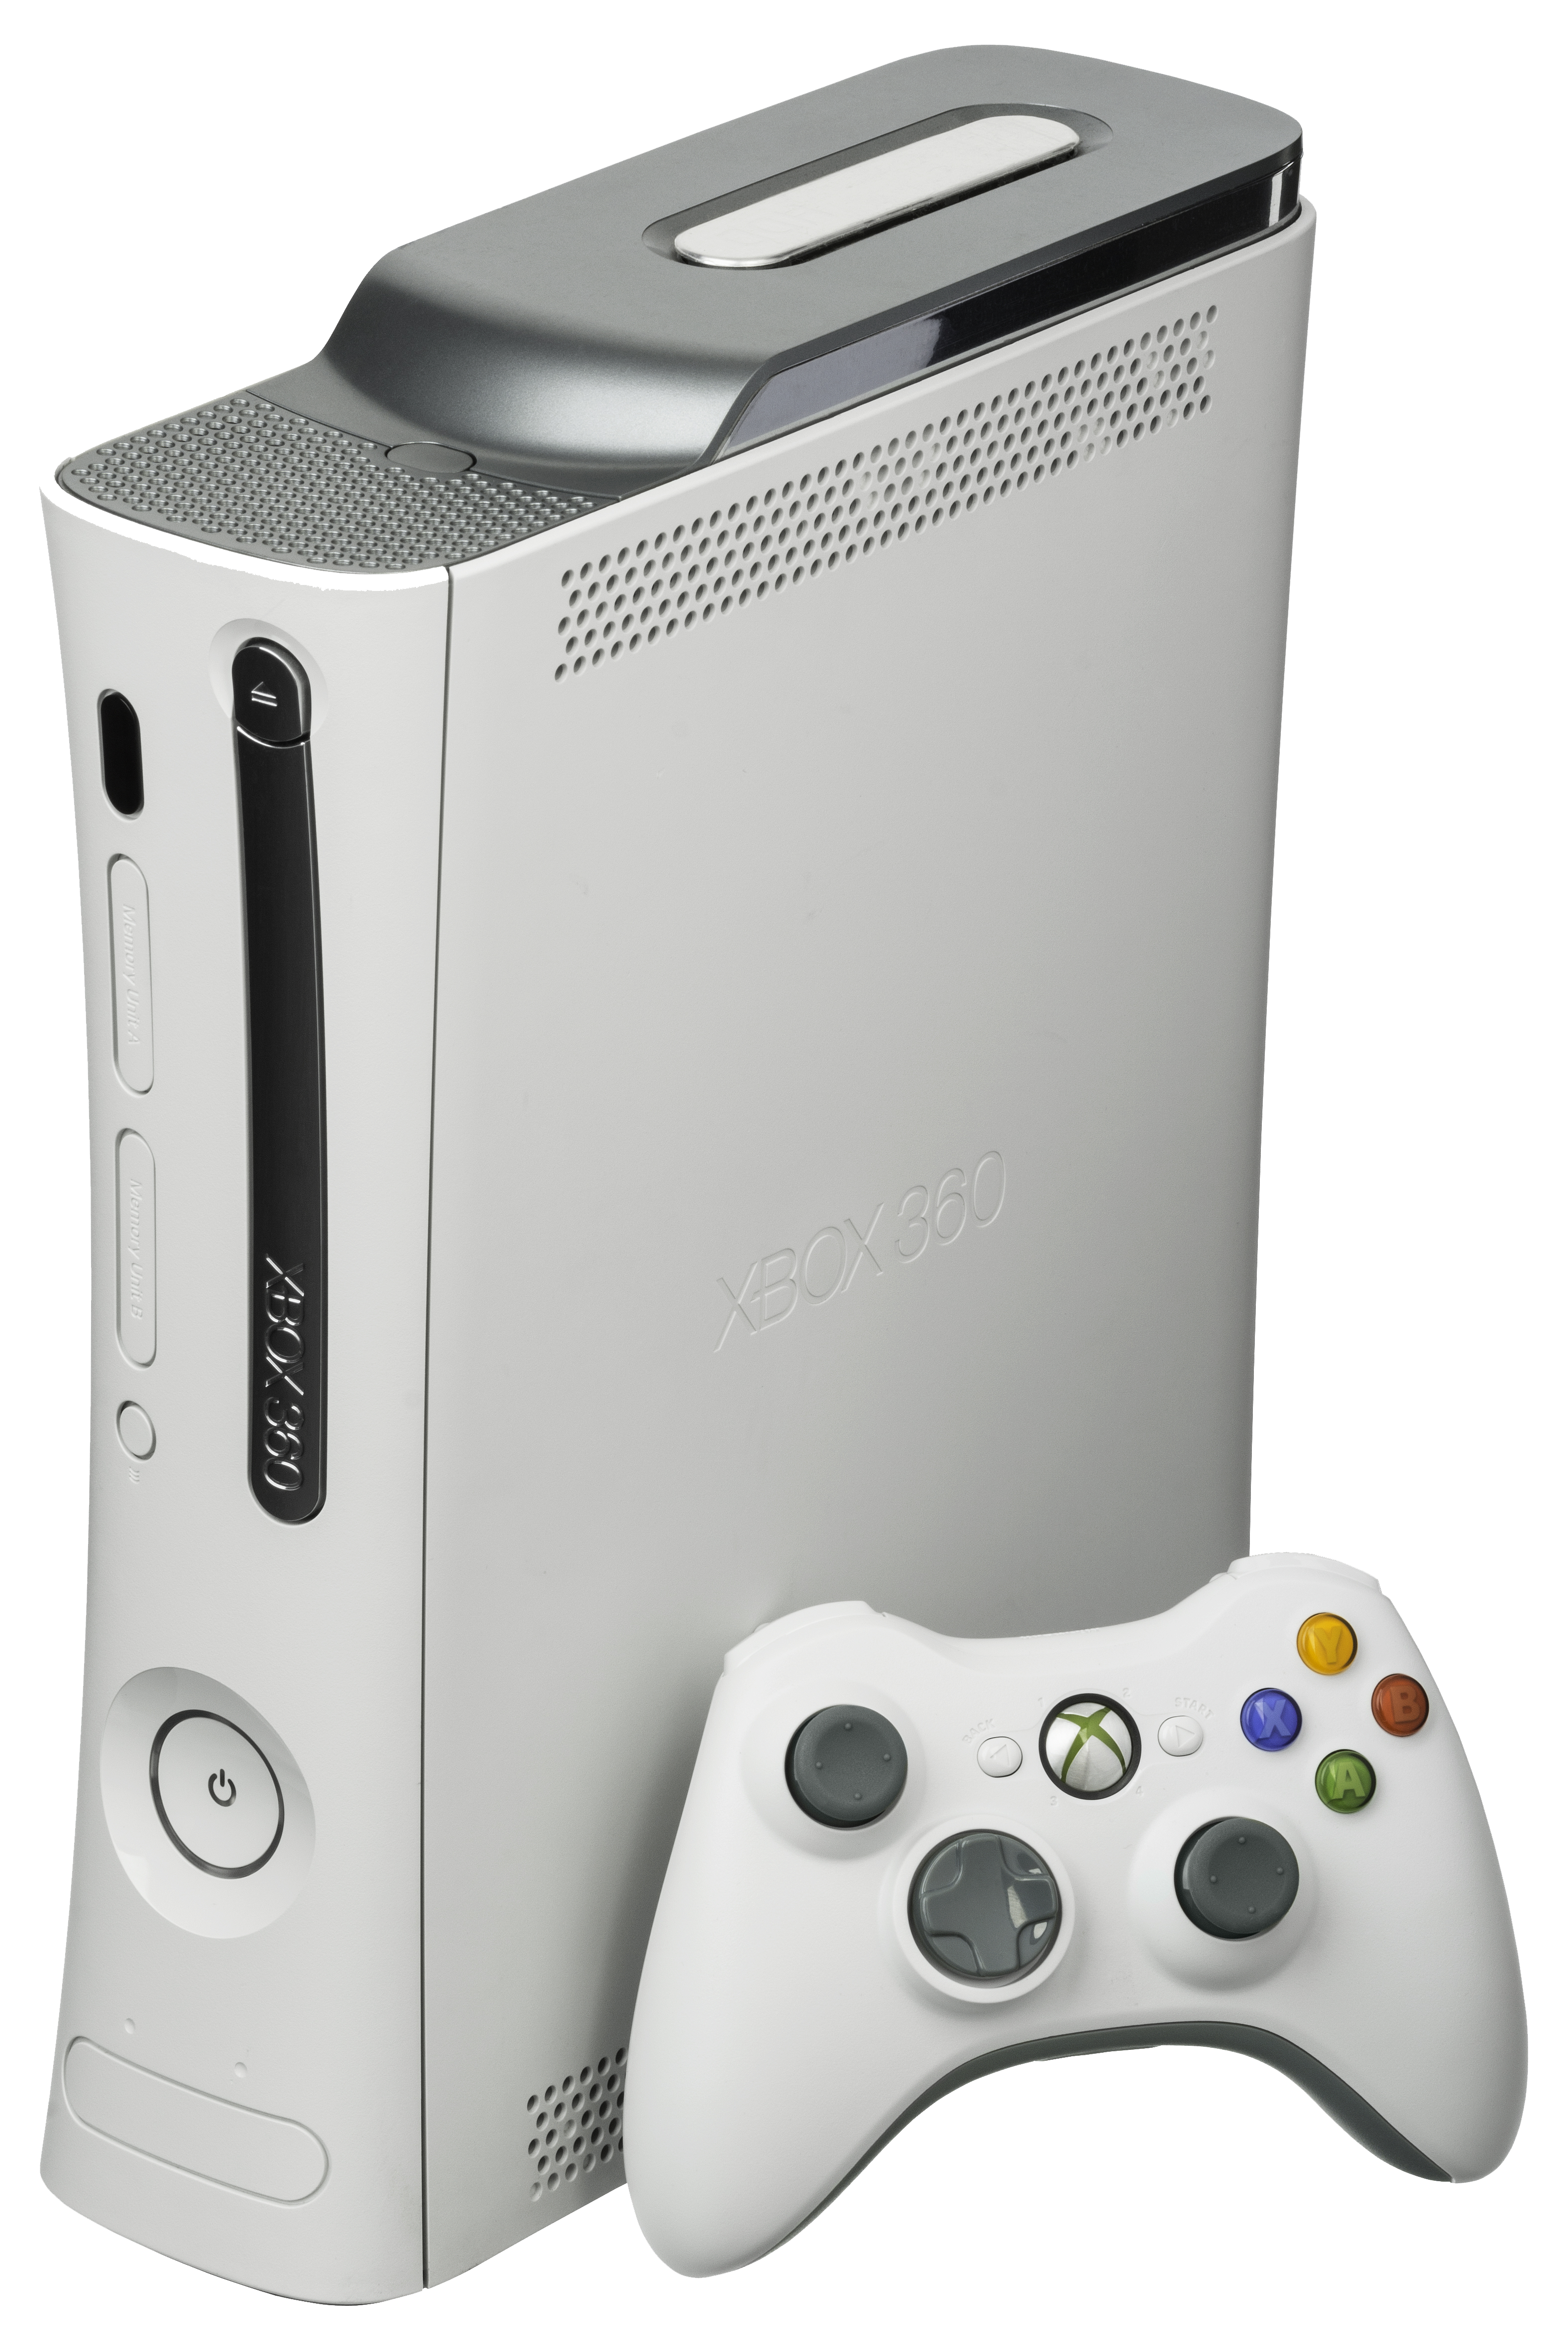 File:Xbox-360-Consoles-Infobo